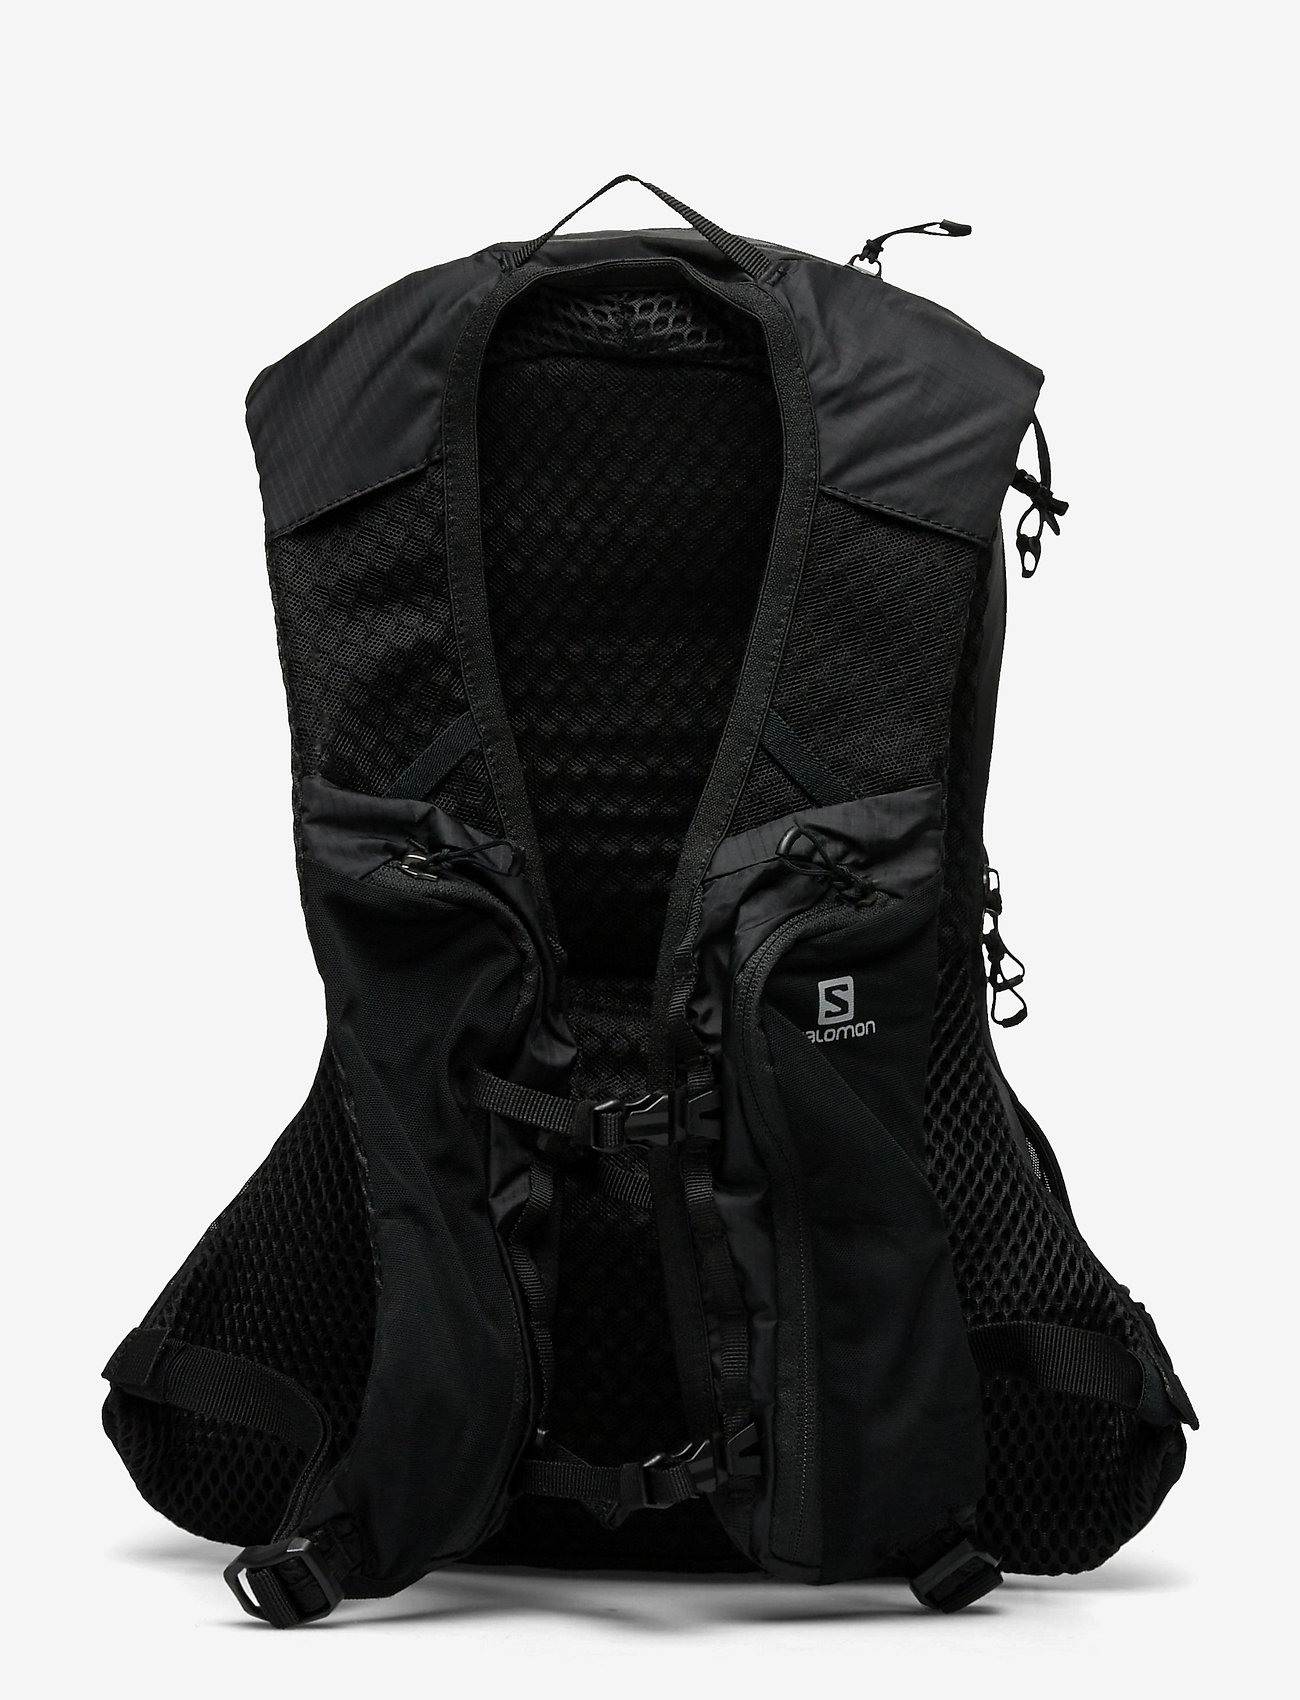 Salomon Xt 10 Black - Backpacks | Boozt.com